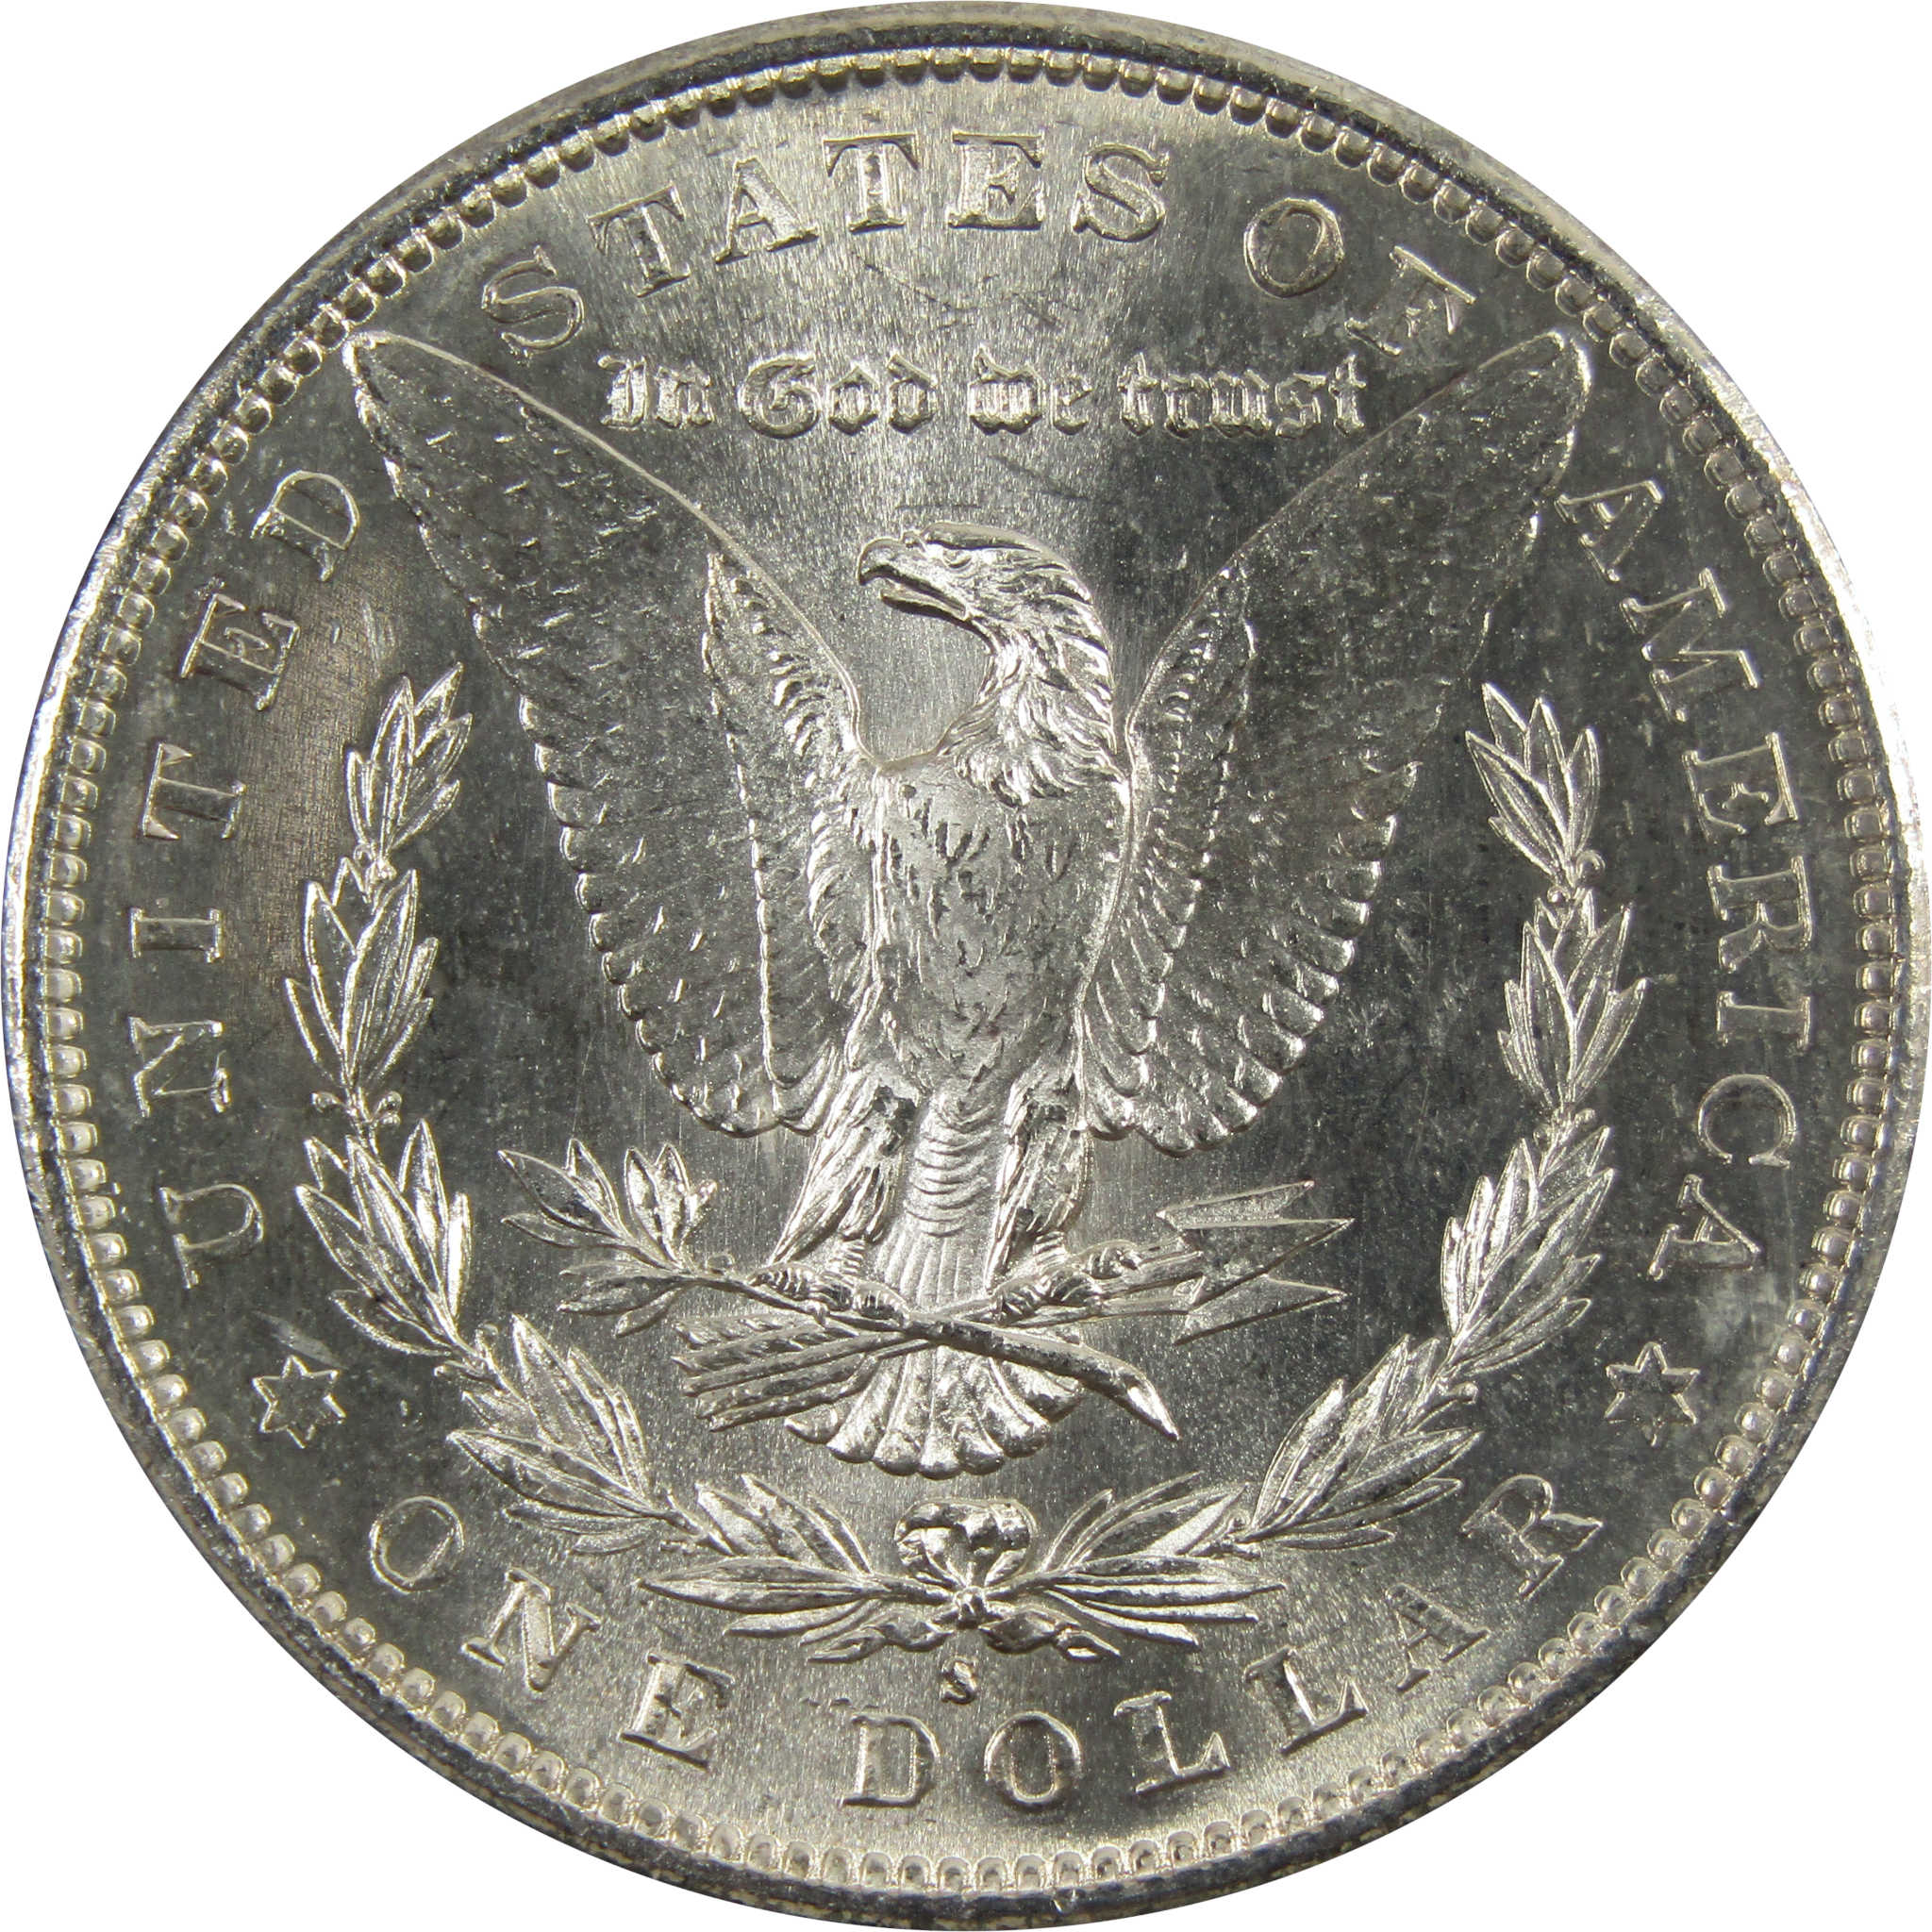 1881 S Morgan Dollar BU Uncirculated 90% Silver $1 Coin SKU:I5307 - Morgan coin - Morgan silver dollar - Morgan silver dollar for sale - Profile Coins &amp; Collectibles